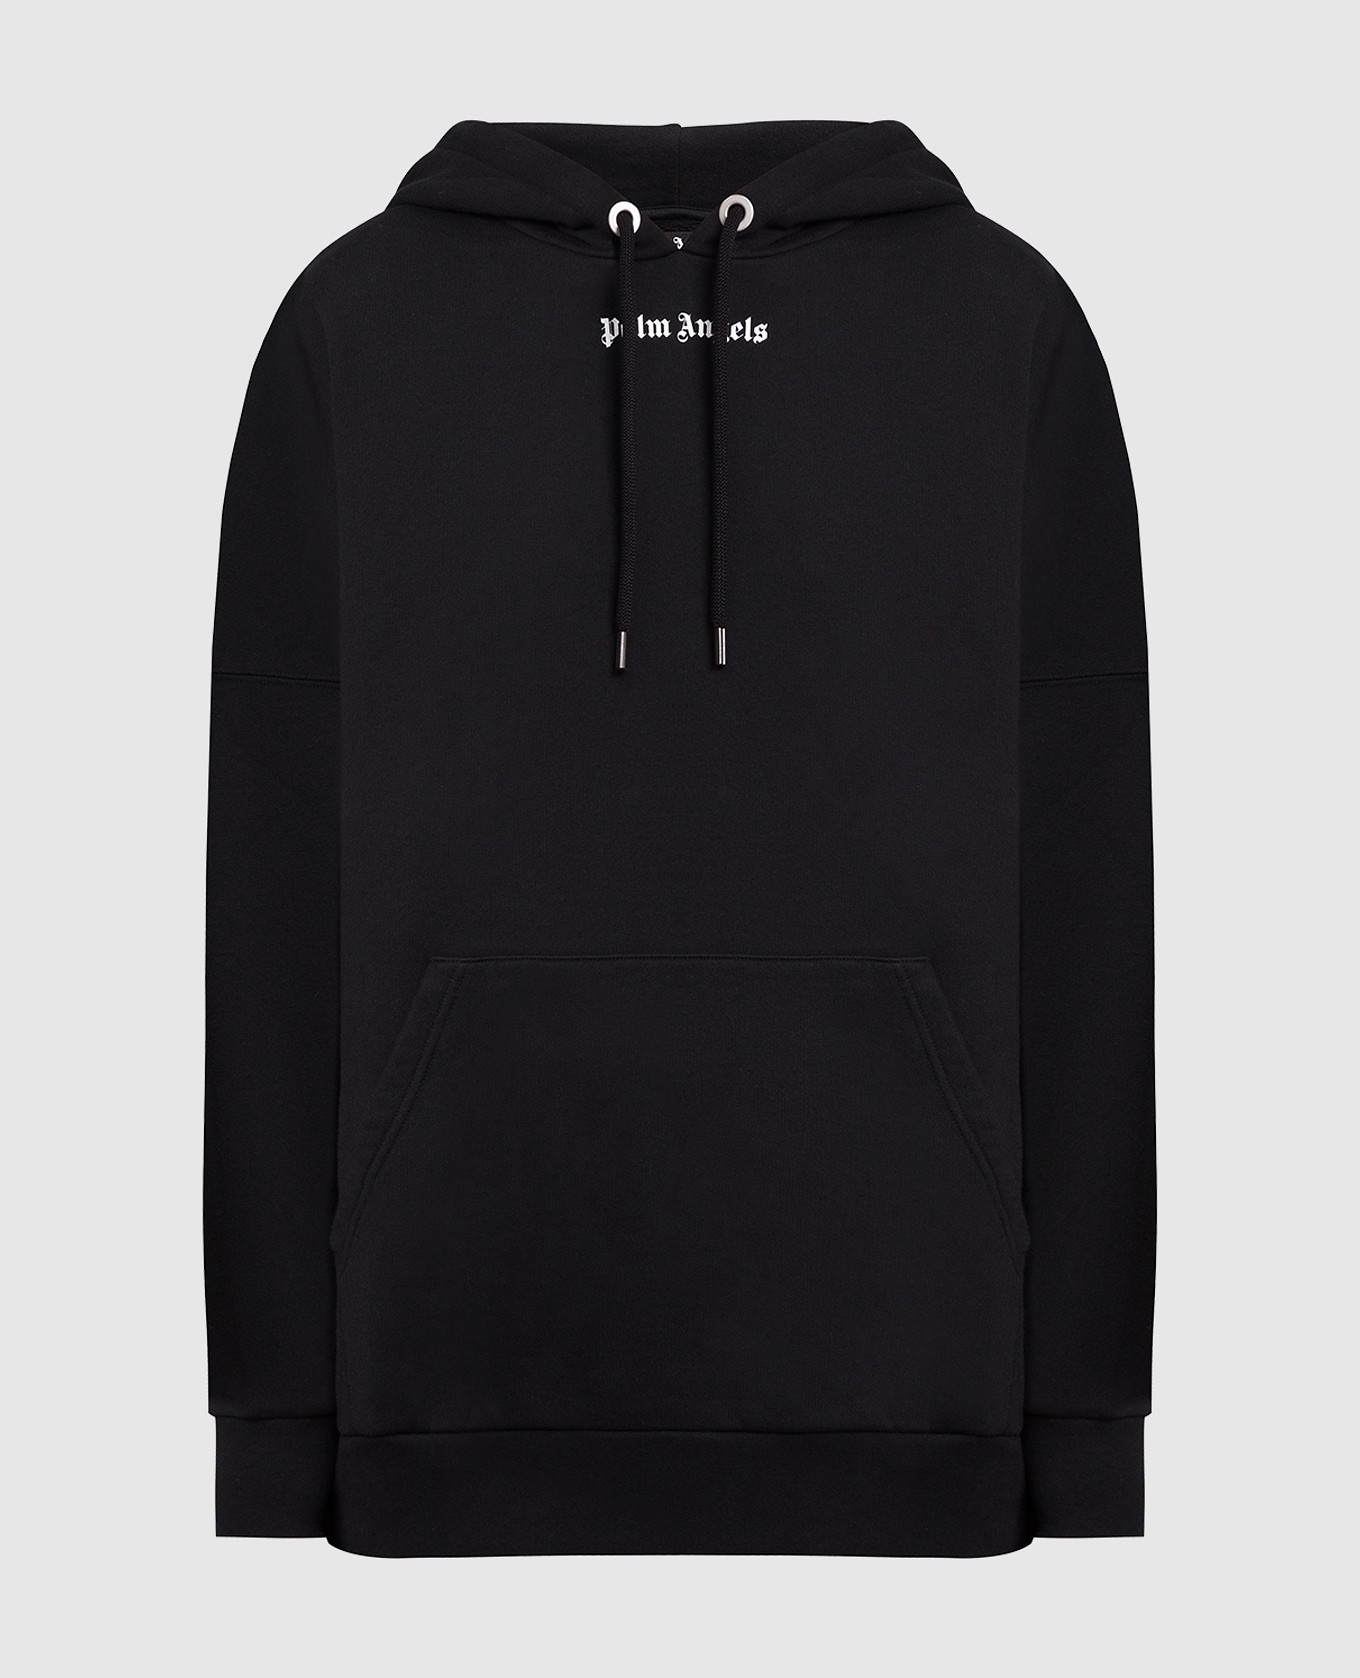 Palm Angels - Black hoodie with contrast logo print